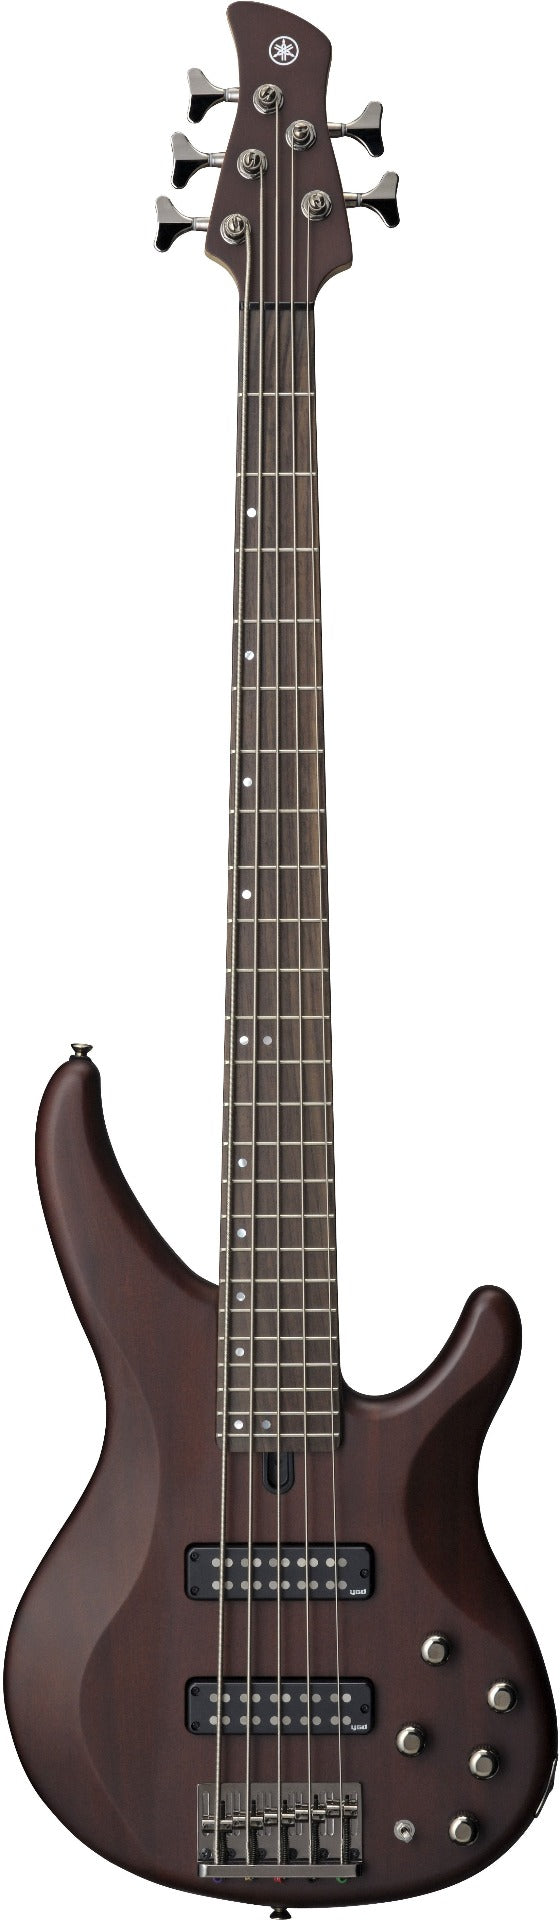 Yamaha TRBX505 TBN 5-String Premium Electric Bass Guitar - Translucent Brown